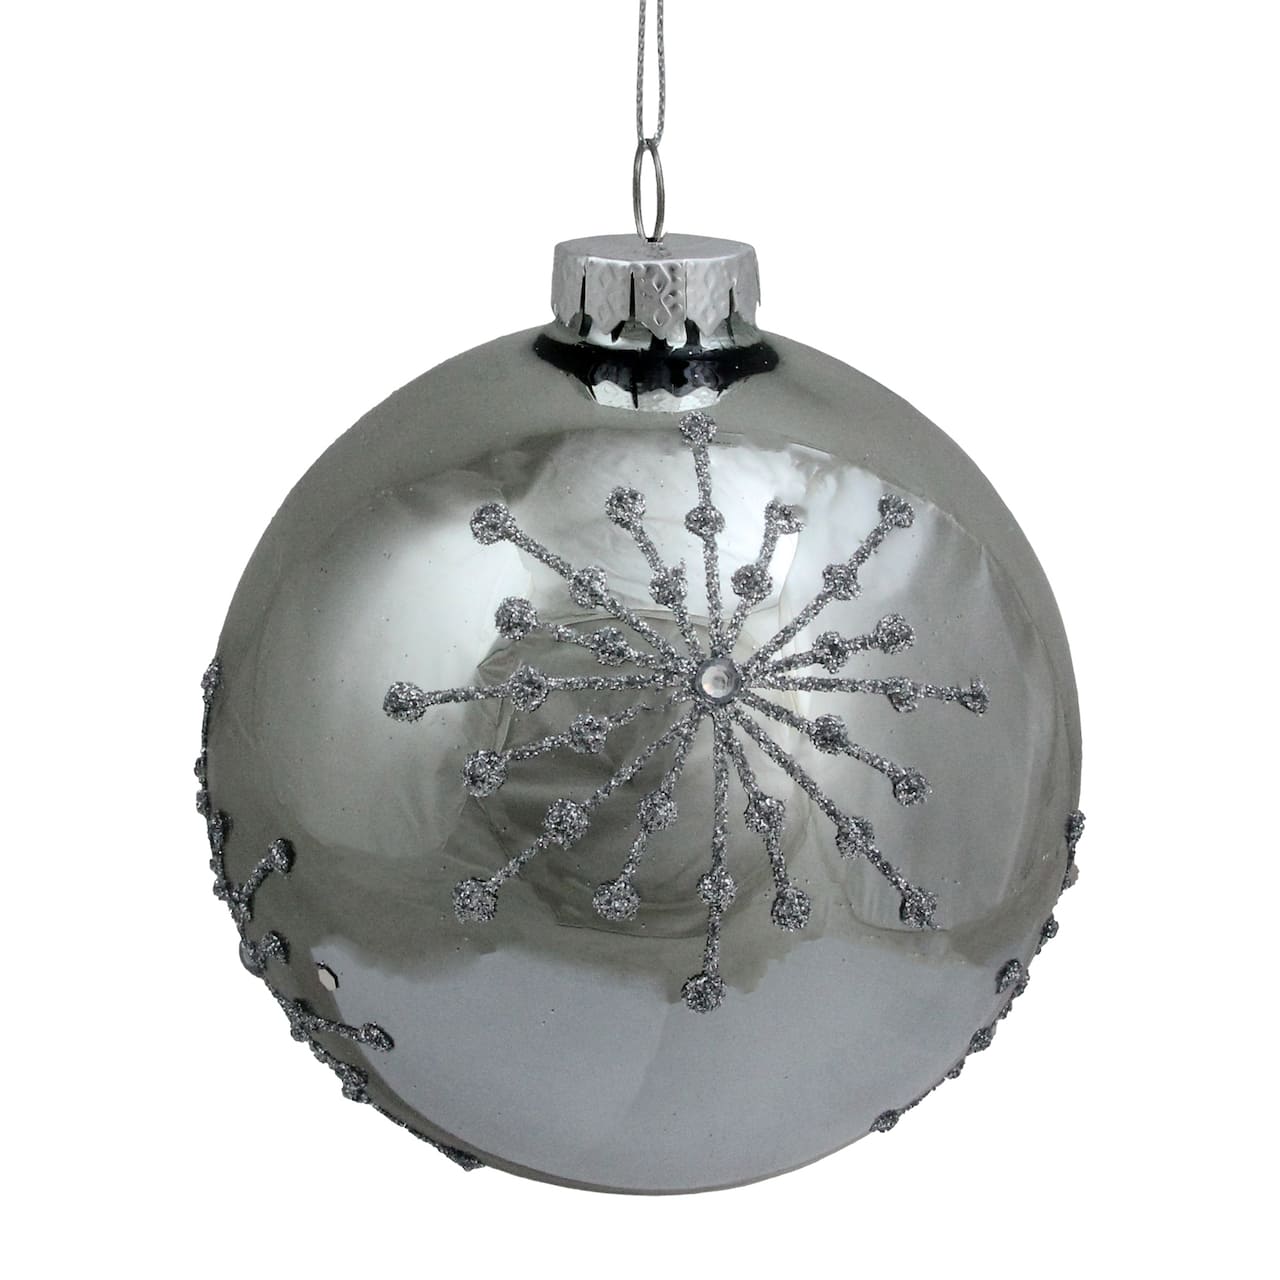 4 Shiny Silver Mirrored Glitter Snowflakes Ball Ornament